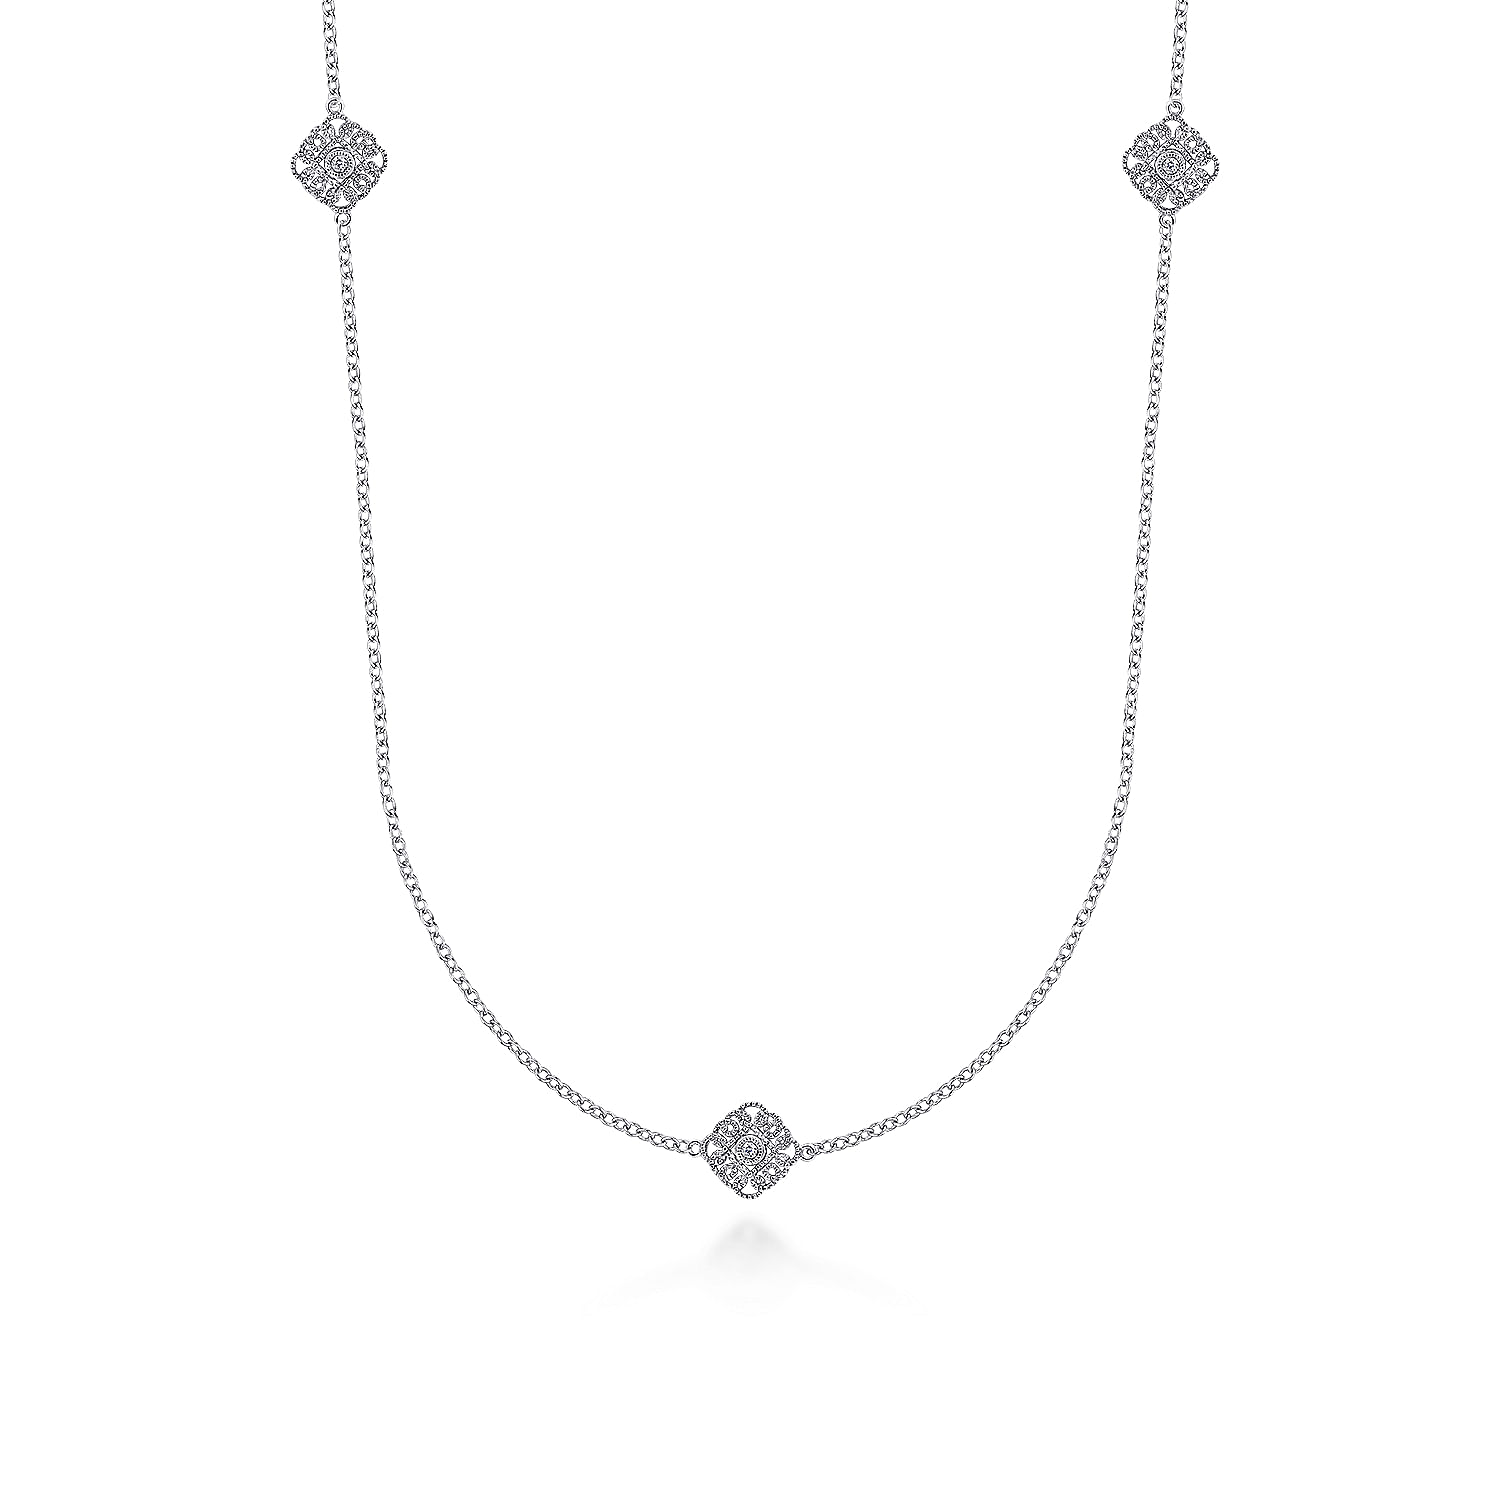 36 inch 925 Sterling Silver Diamond Filigree Station Necklace